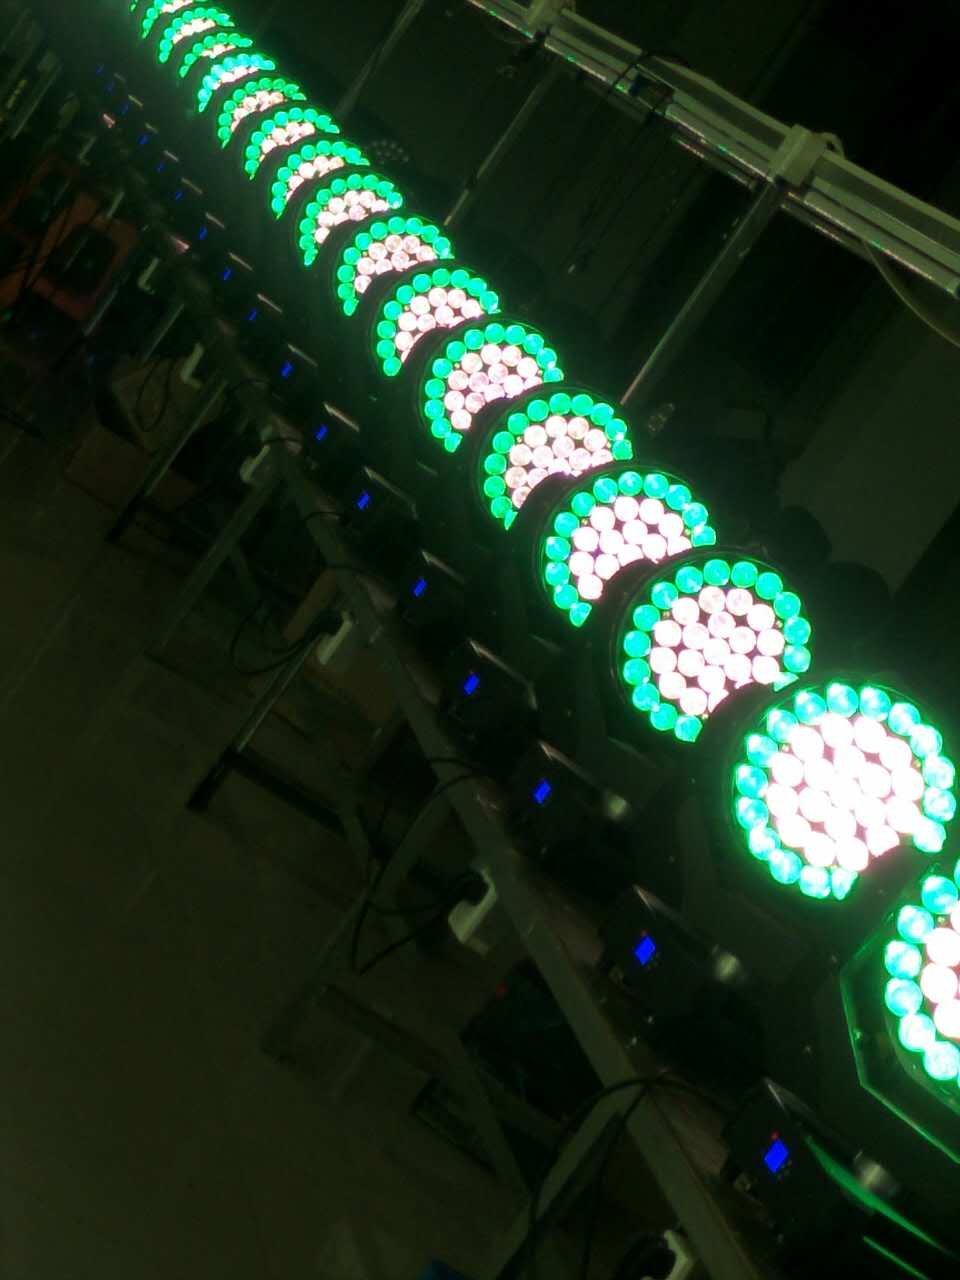 37X15W LED Moving Head Light Zoom MS-3715